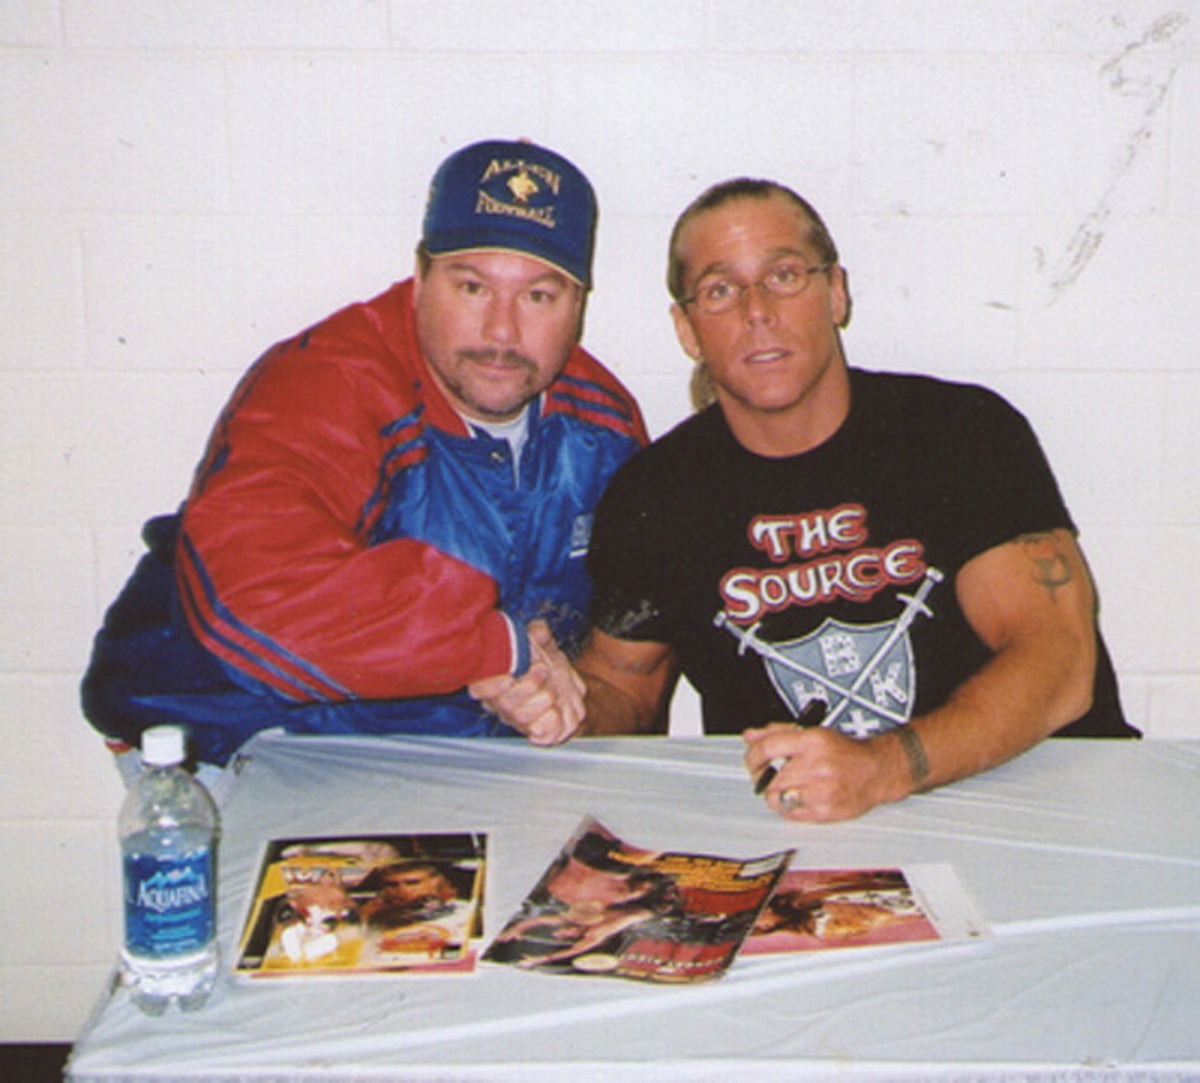 BD17  Shawn Michaels 2X   Bret Hart  Sunny  Blue Meanie    Autographed VERY RARE  Vintage Wrestling Magazine w/COA